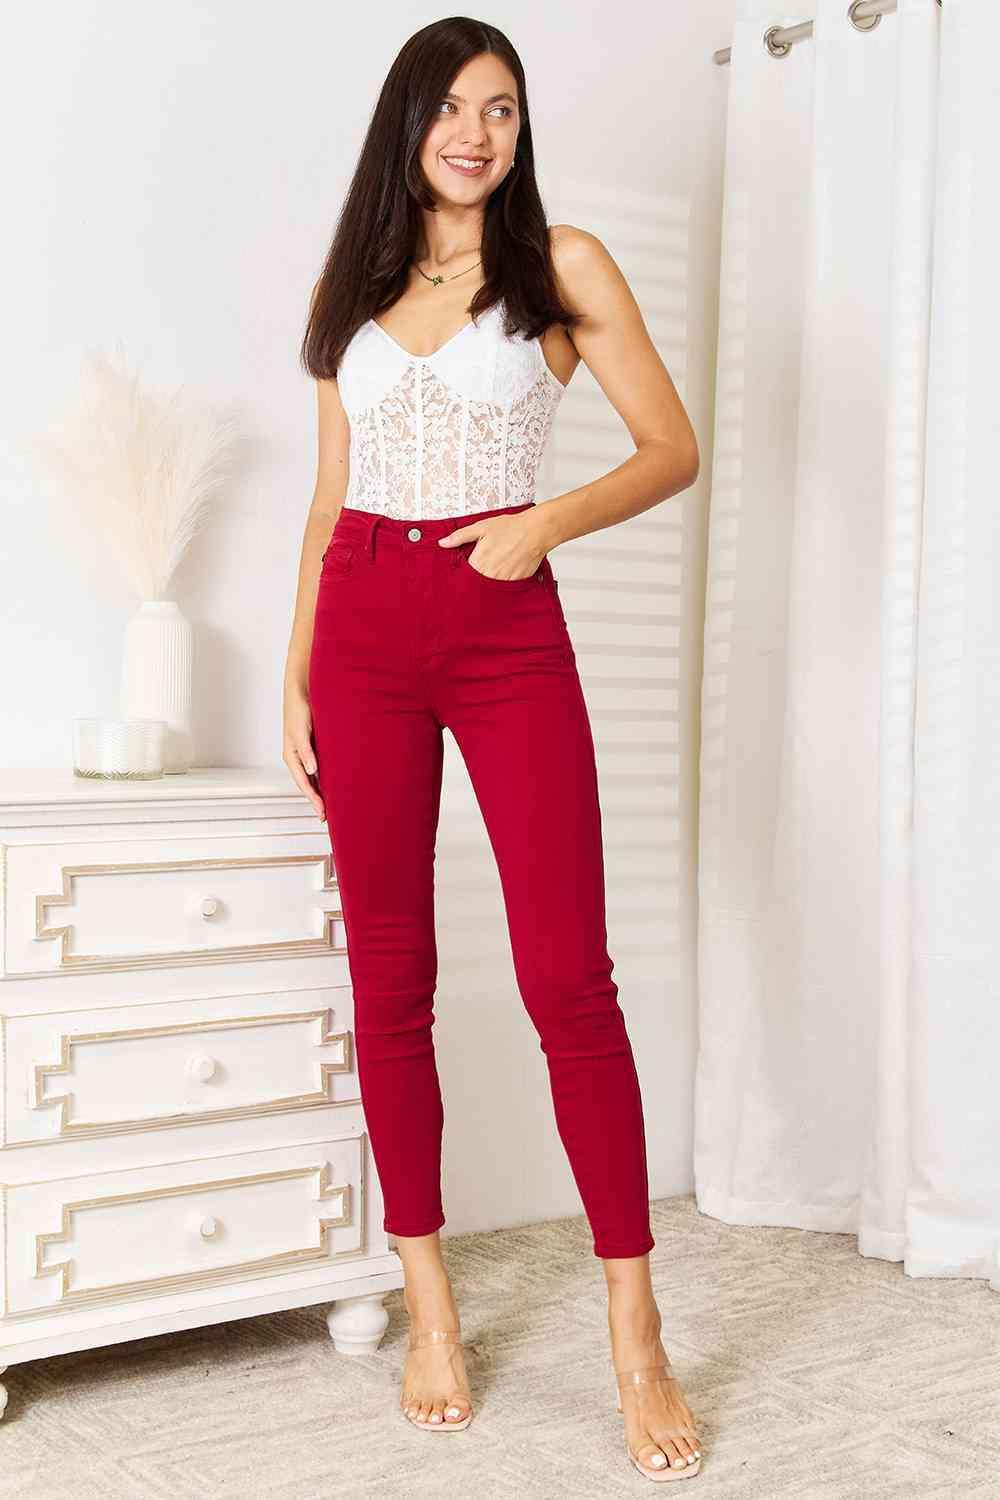 Cool Trailblazer High Waist Plus Size Red Skinny Jeans - MXSTUDIO.COM